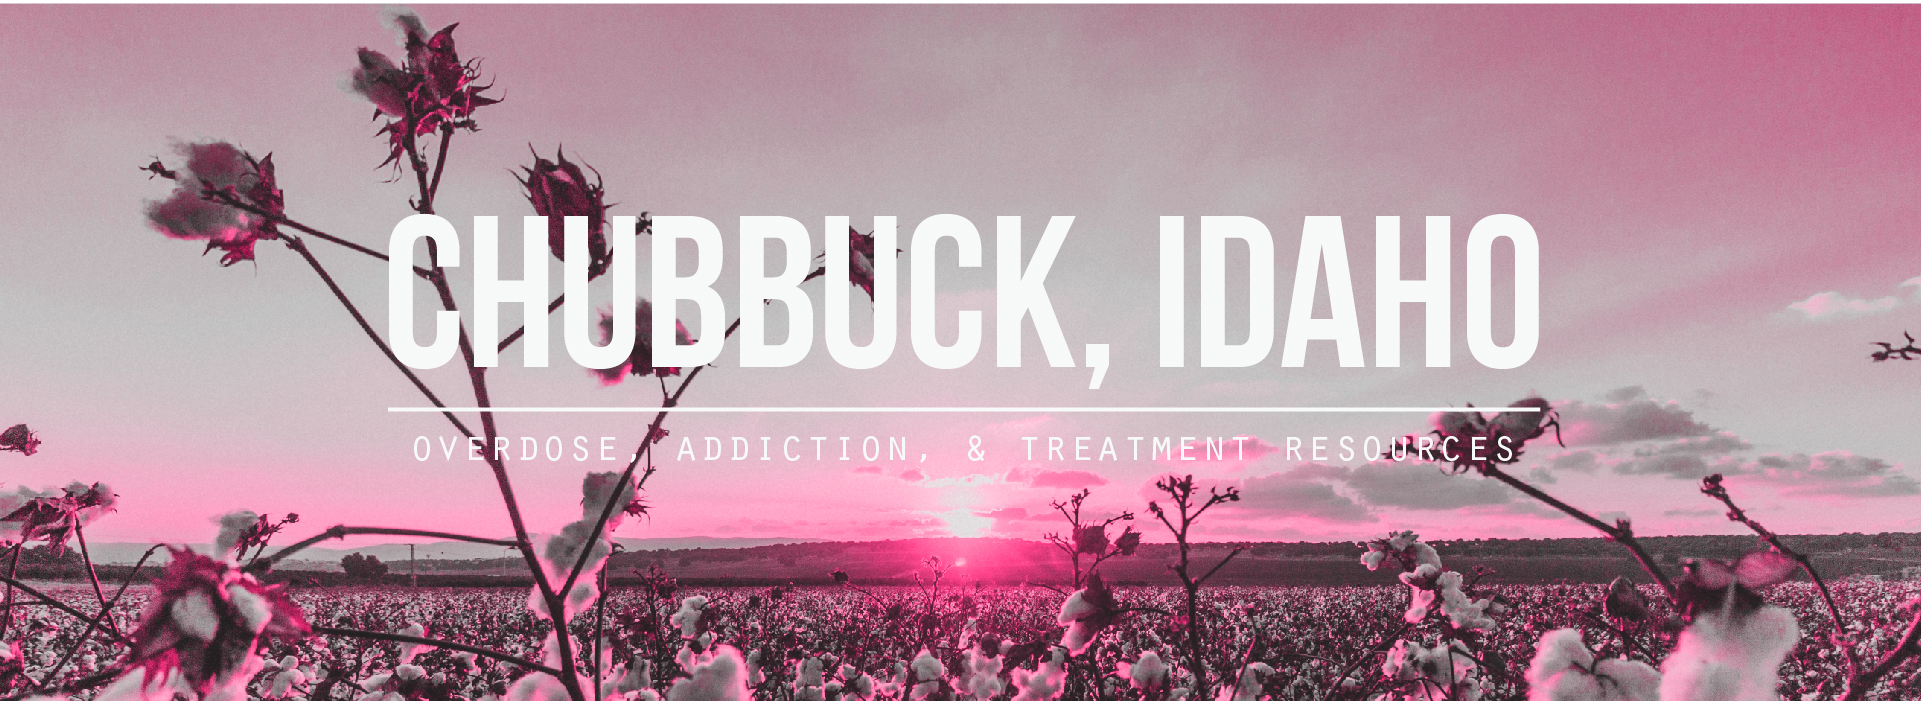 Chubbuck, Idaho, Overdose, Addiction and treatment resources